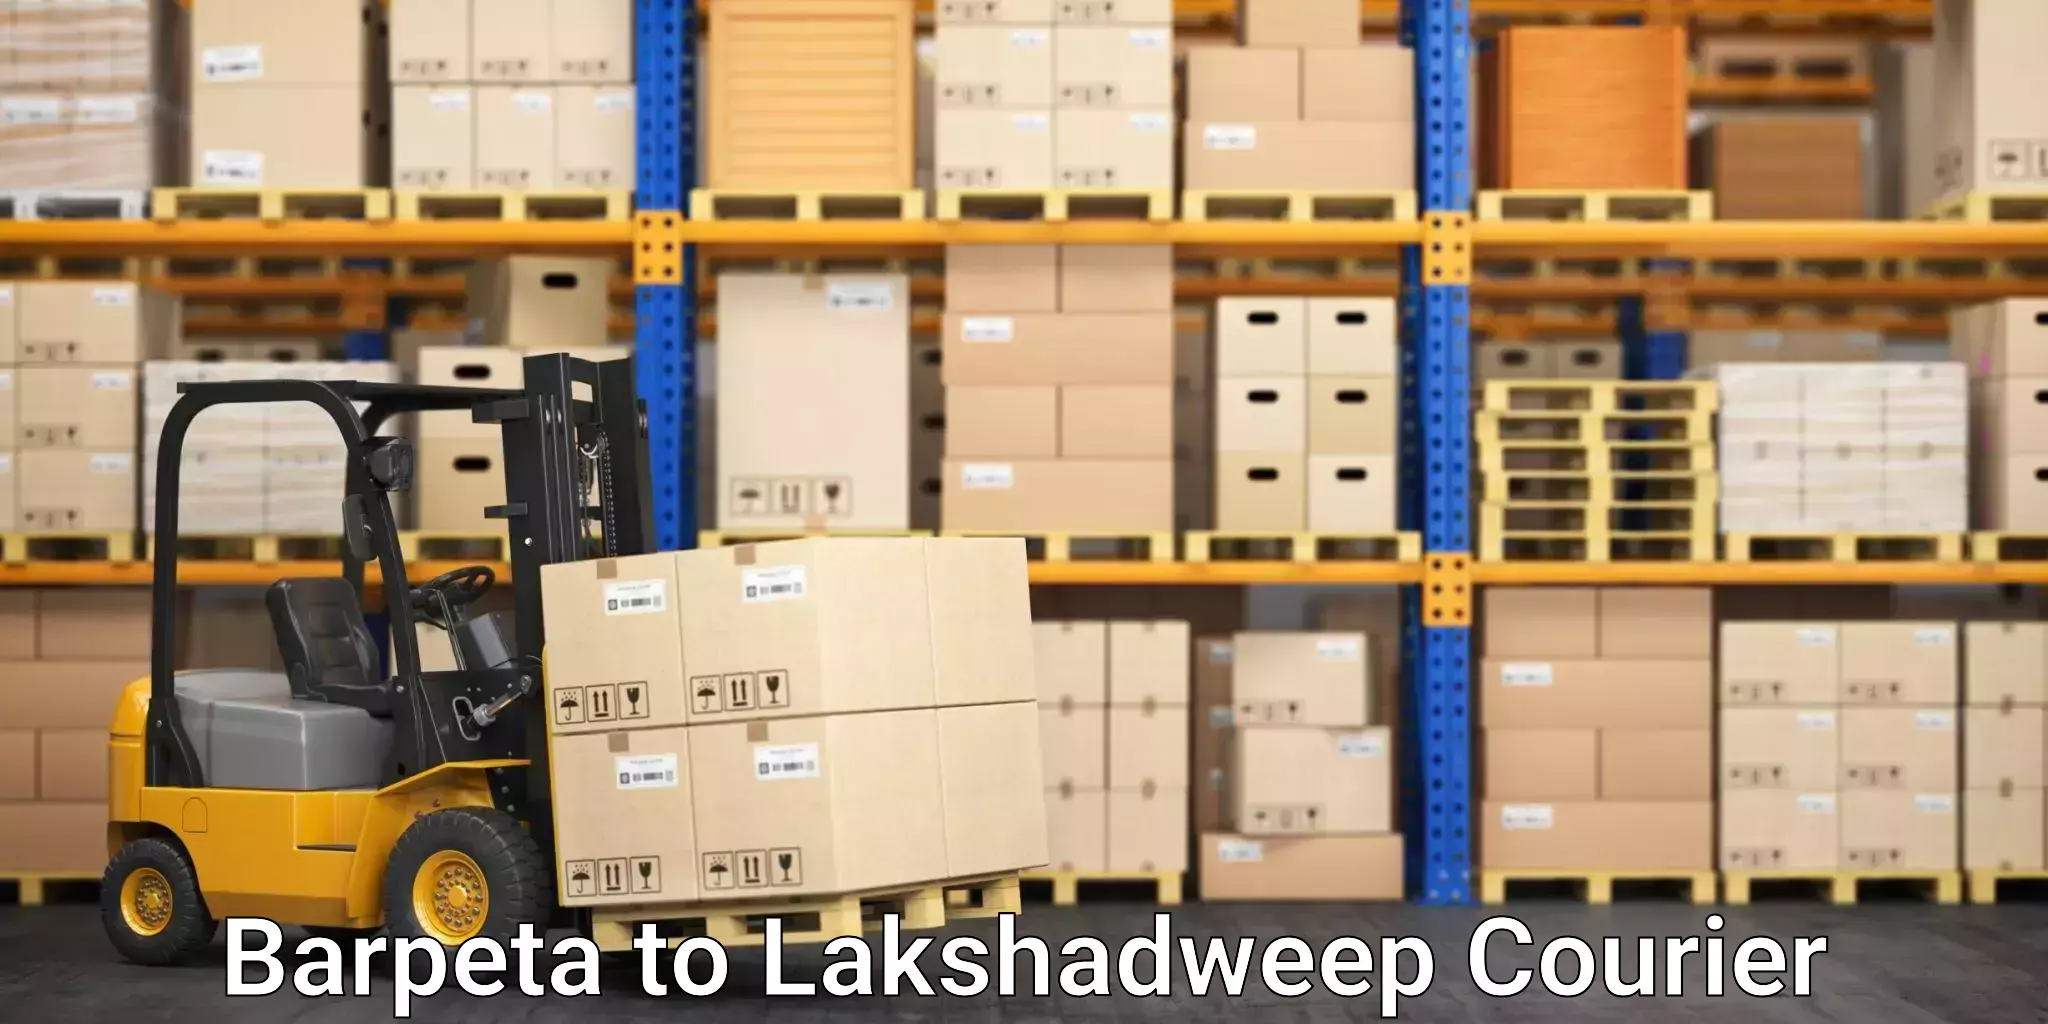 Affordable parcel service Barpeta to Lakshadweep